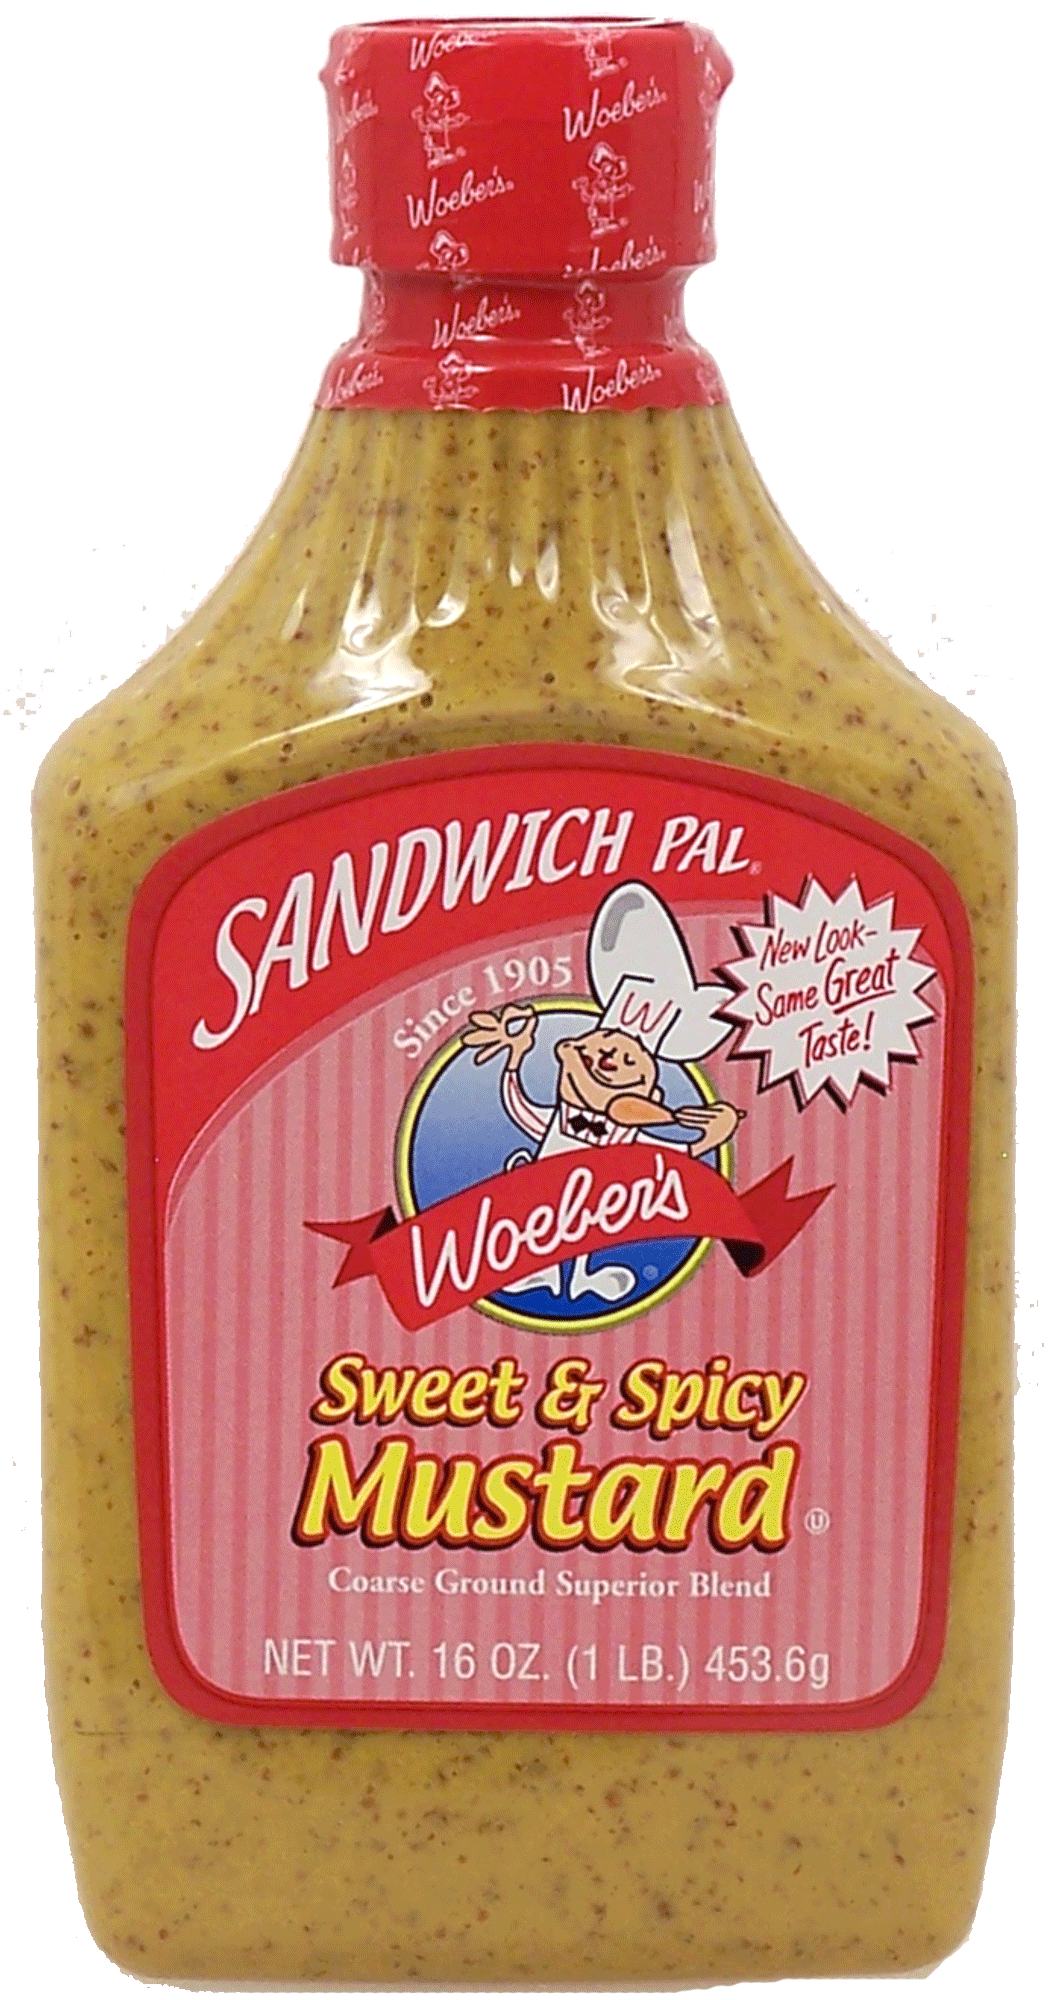 Woeber's Sandwich Pal sweet & spicy mustard Full-Size Picture